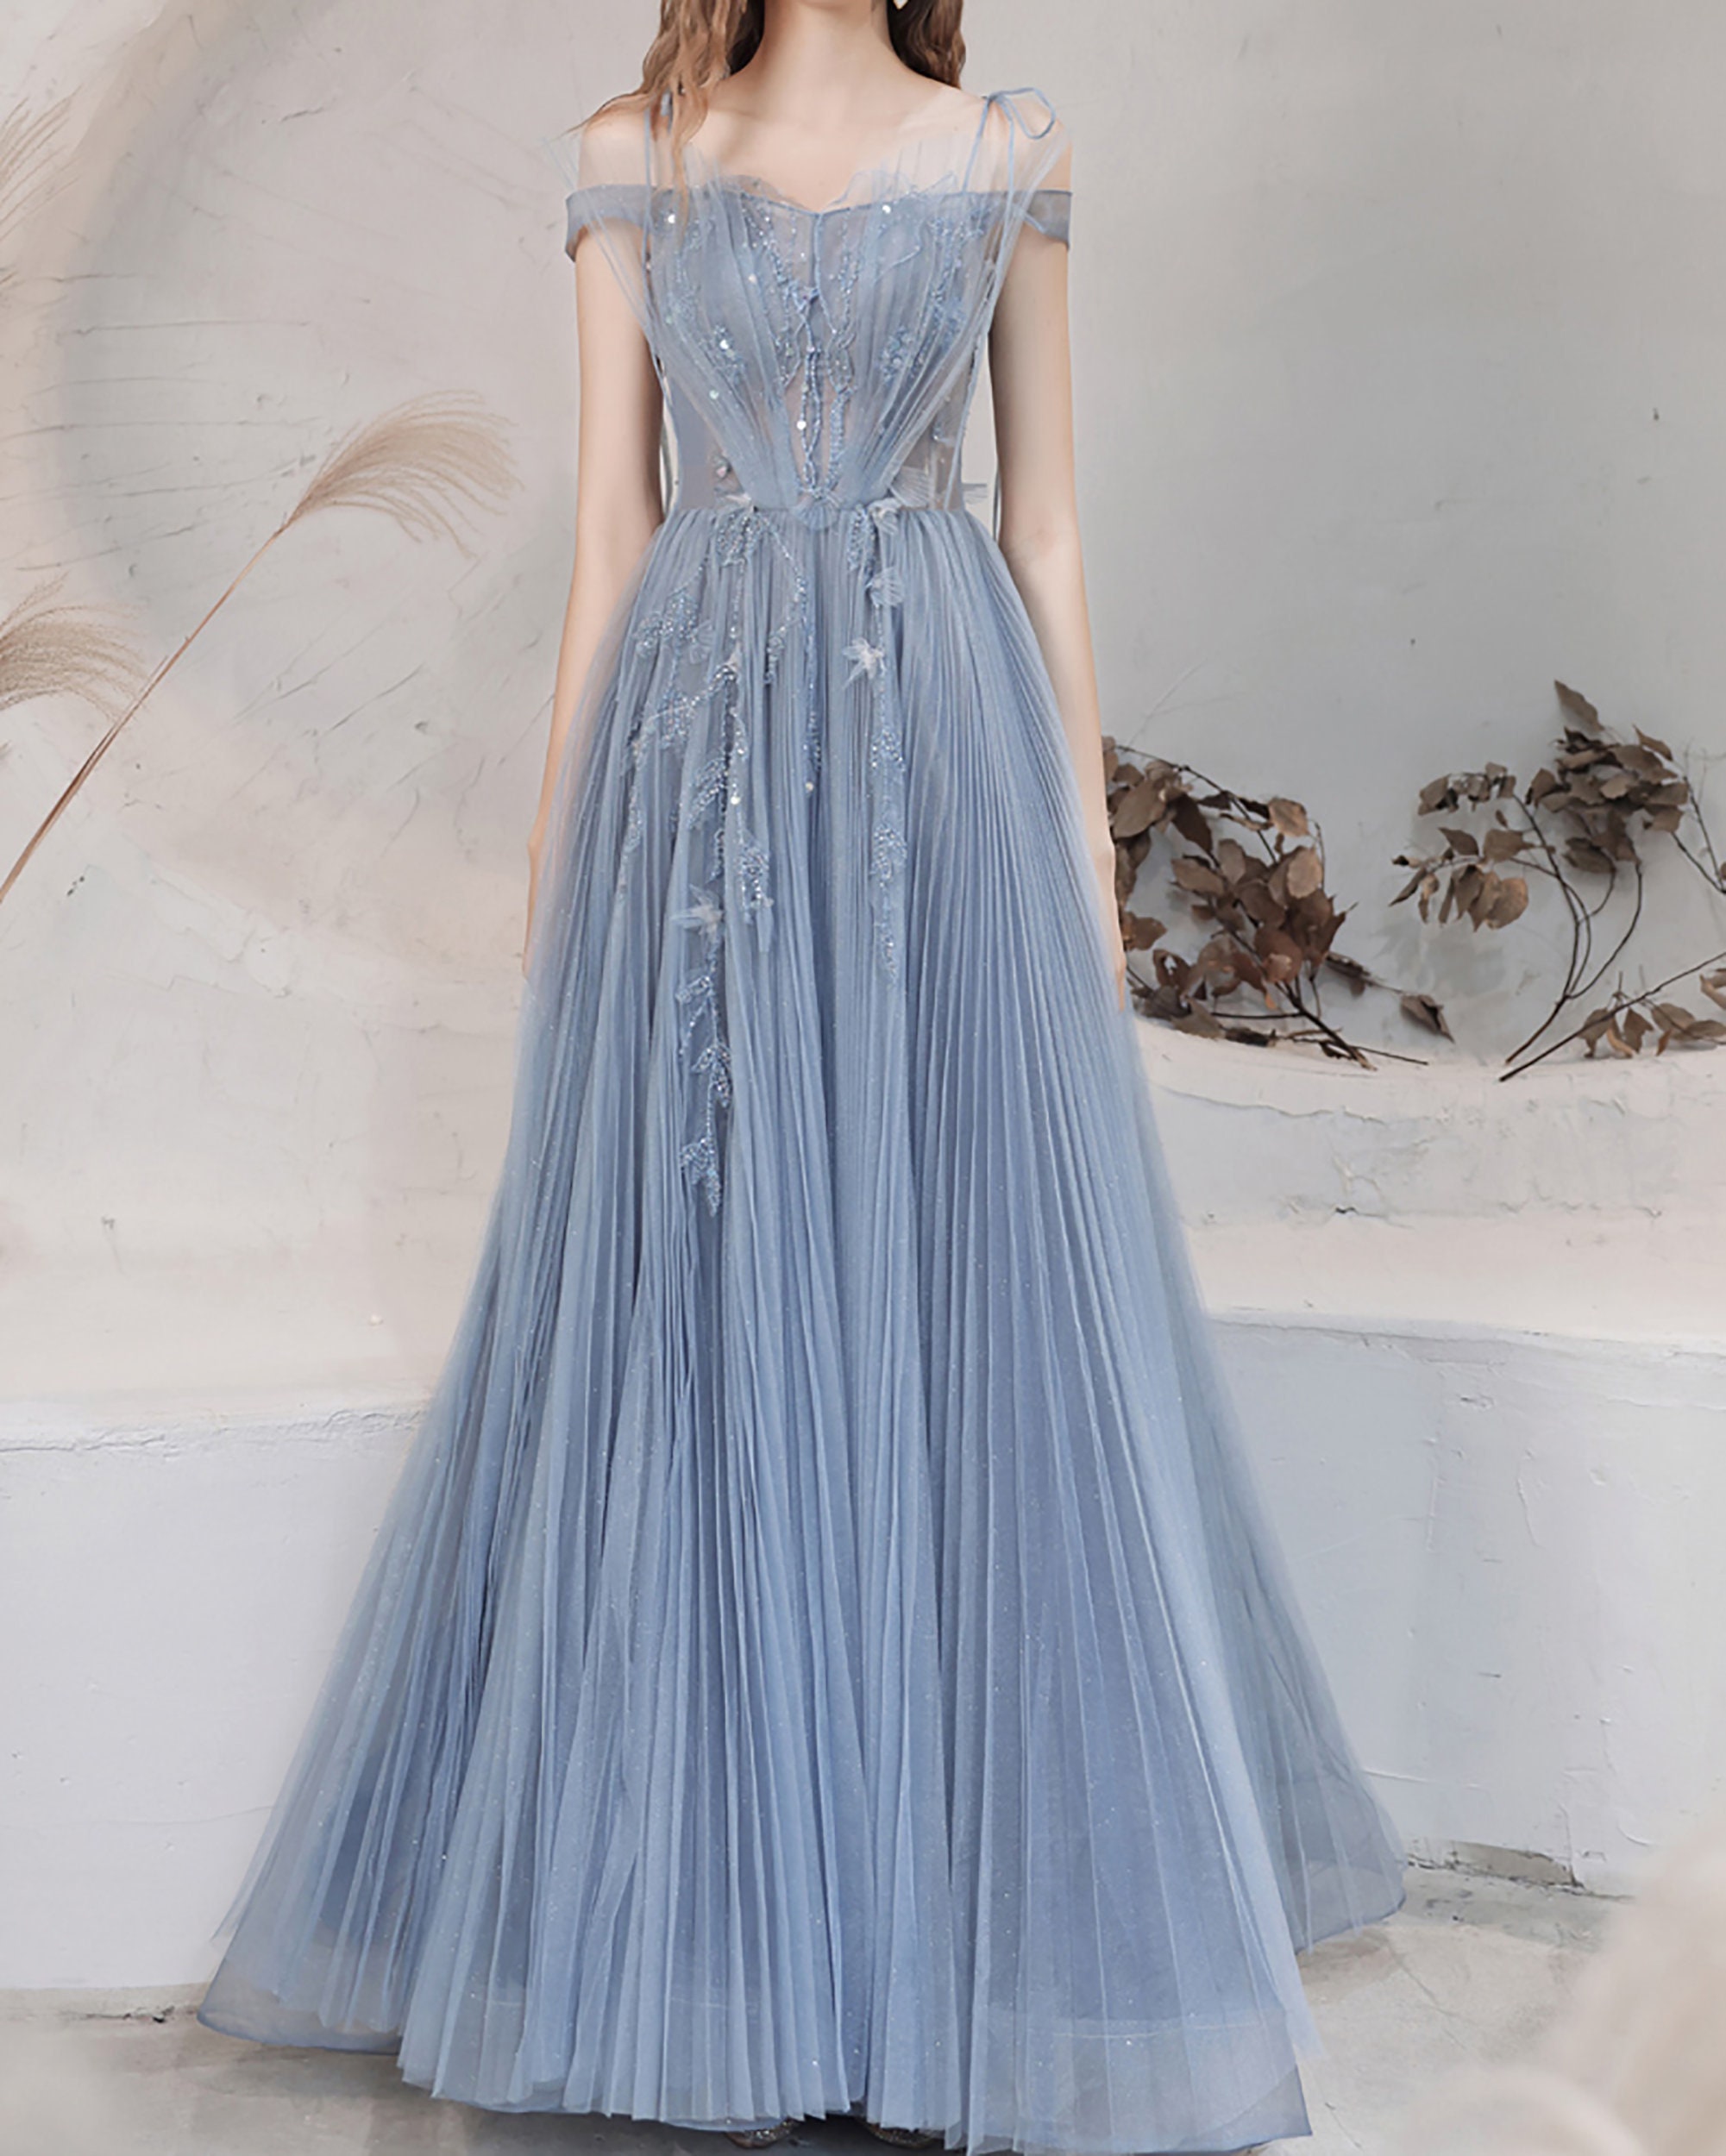 Blue Spaghetti Straps Prom Dress Off-Shoulder Dress Shinny | Etsy